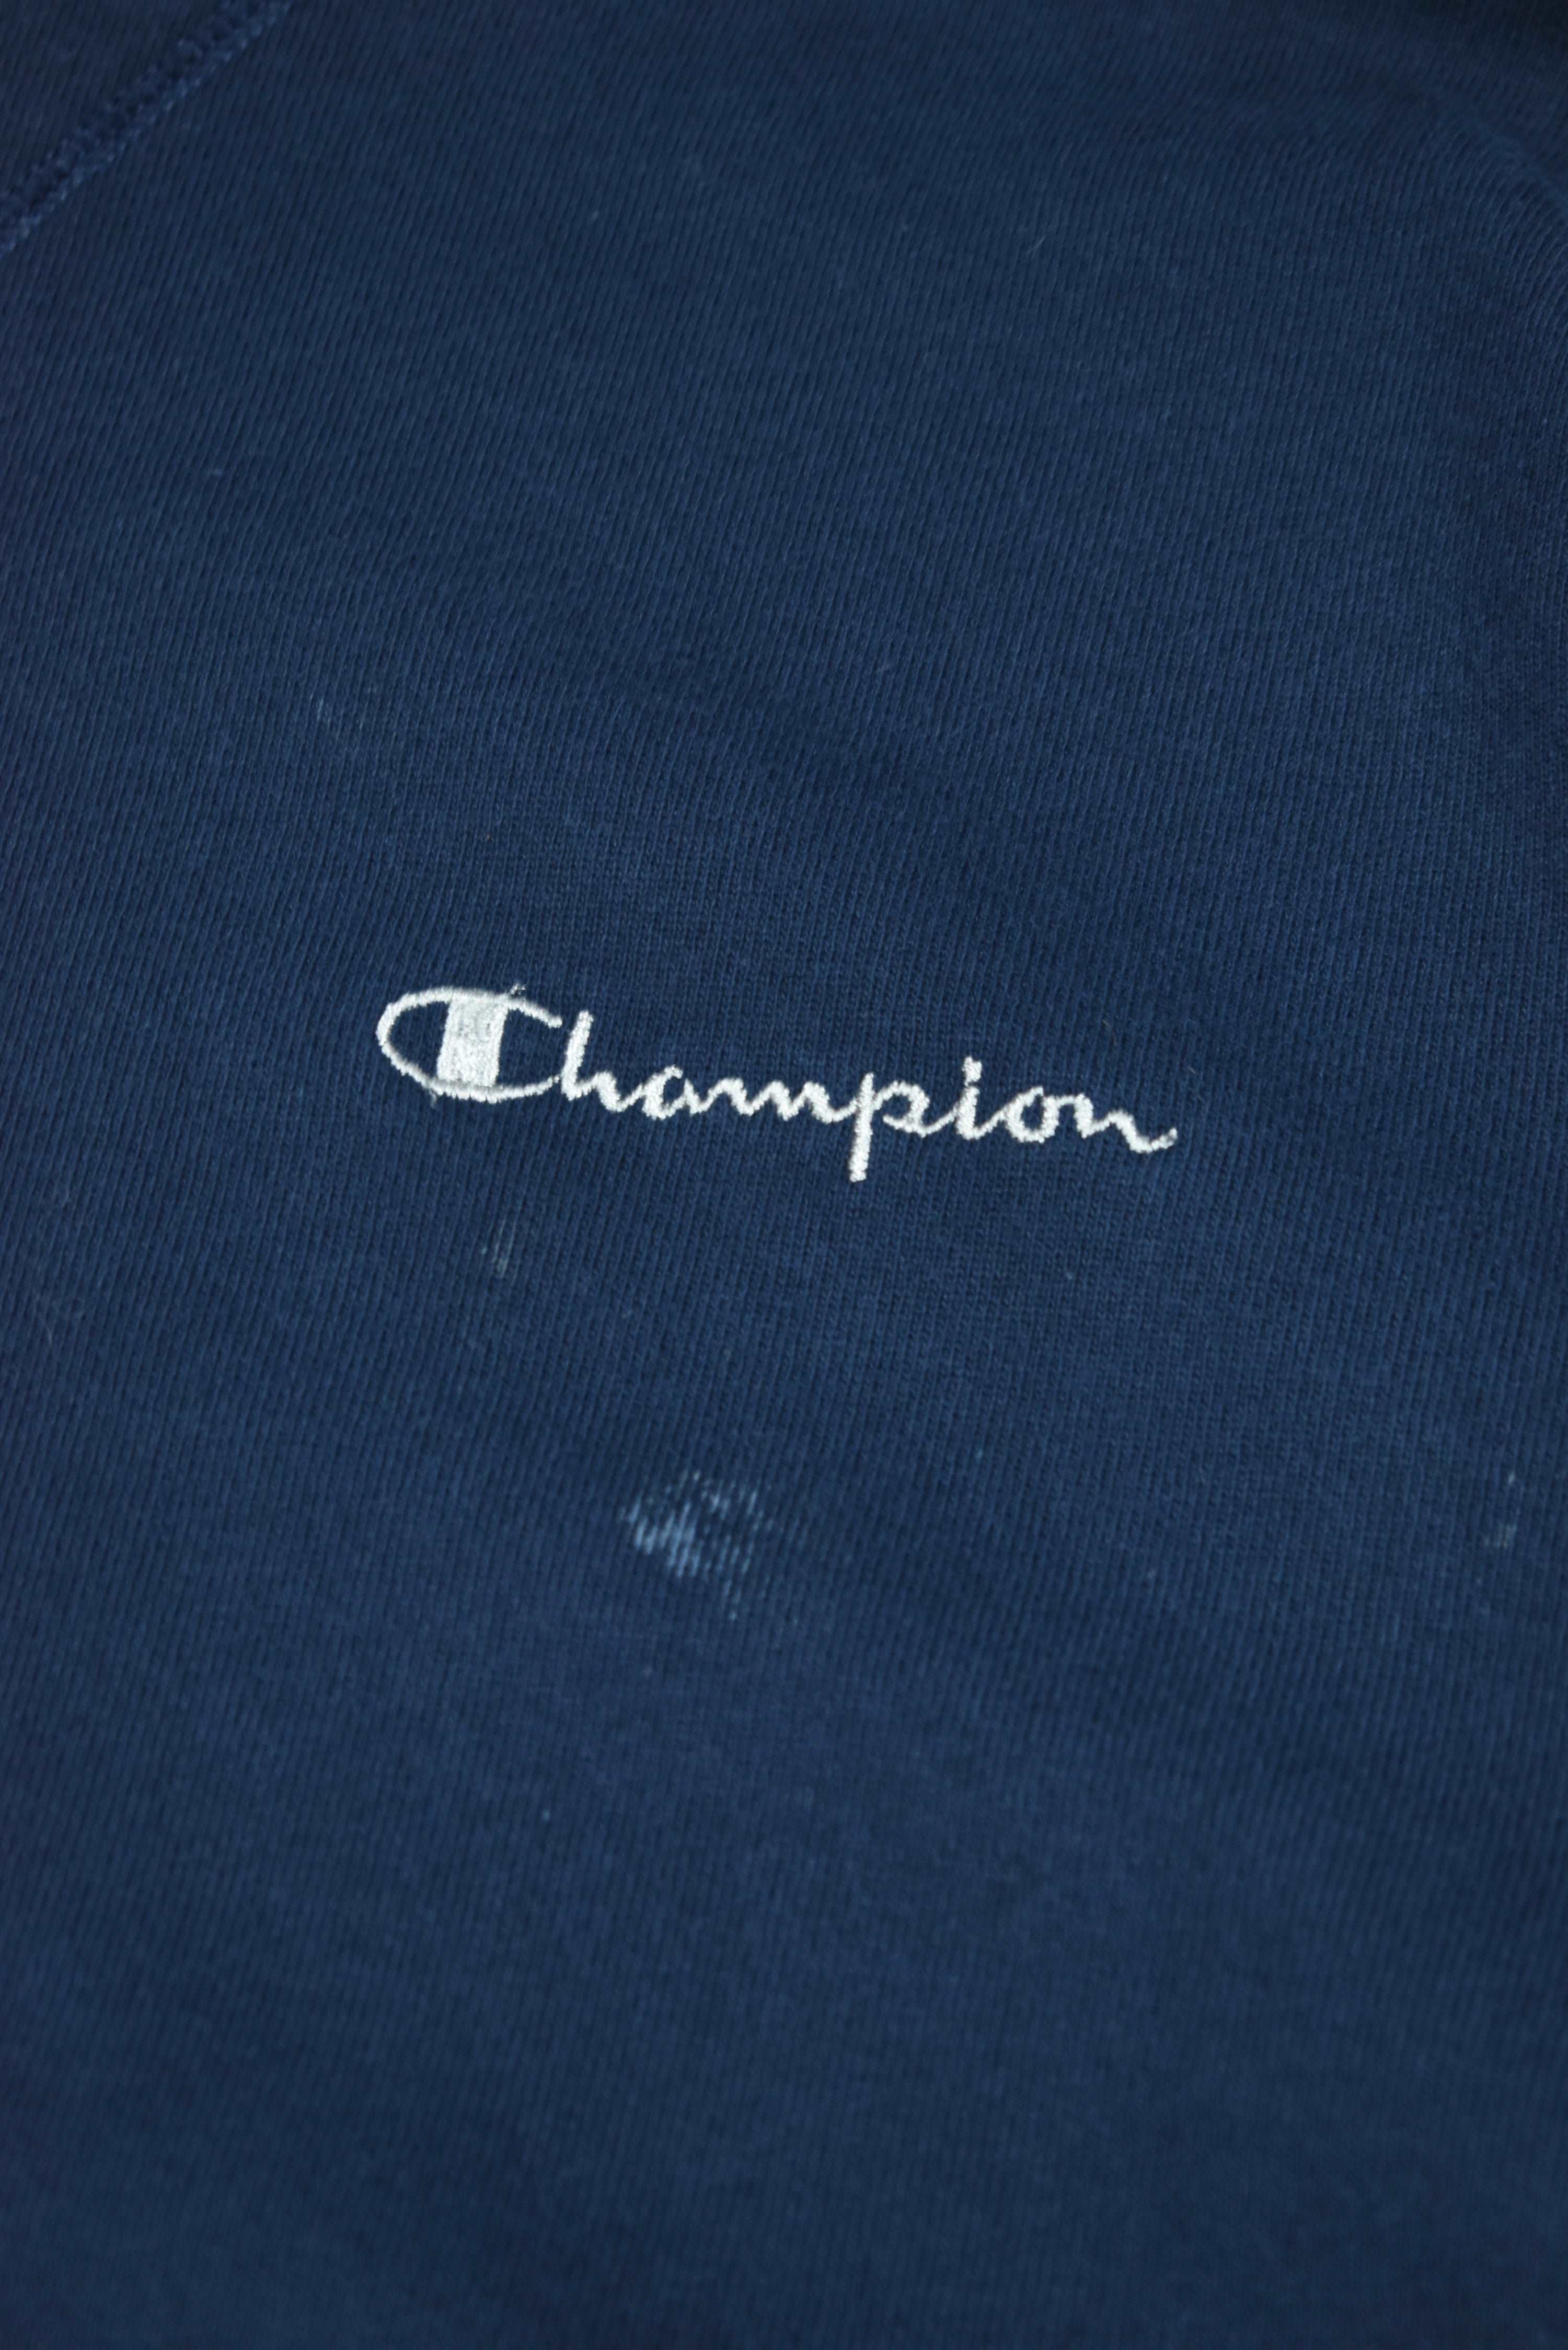 Vintage Champion Embroidered Logo Sweatshirt Large